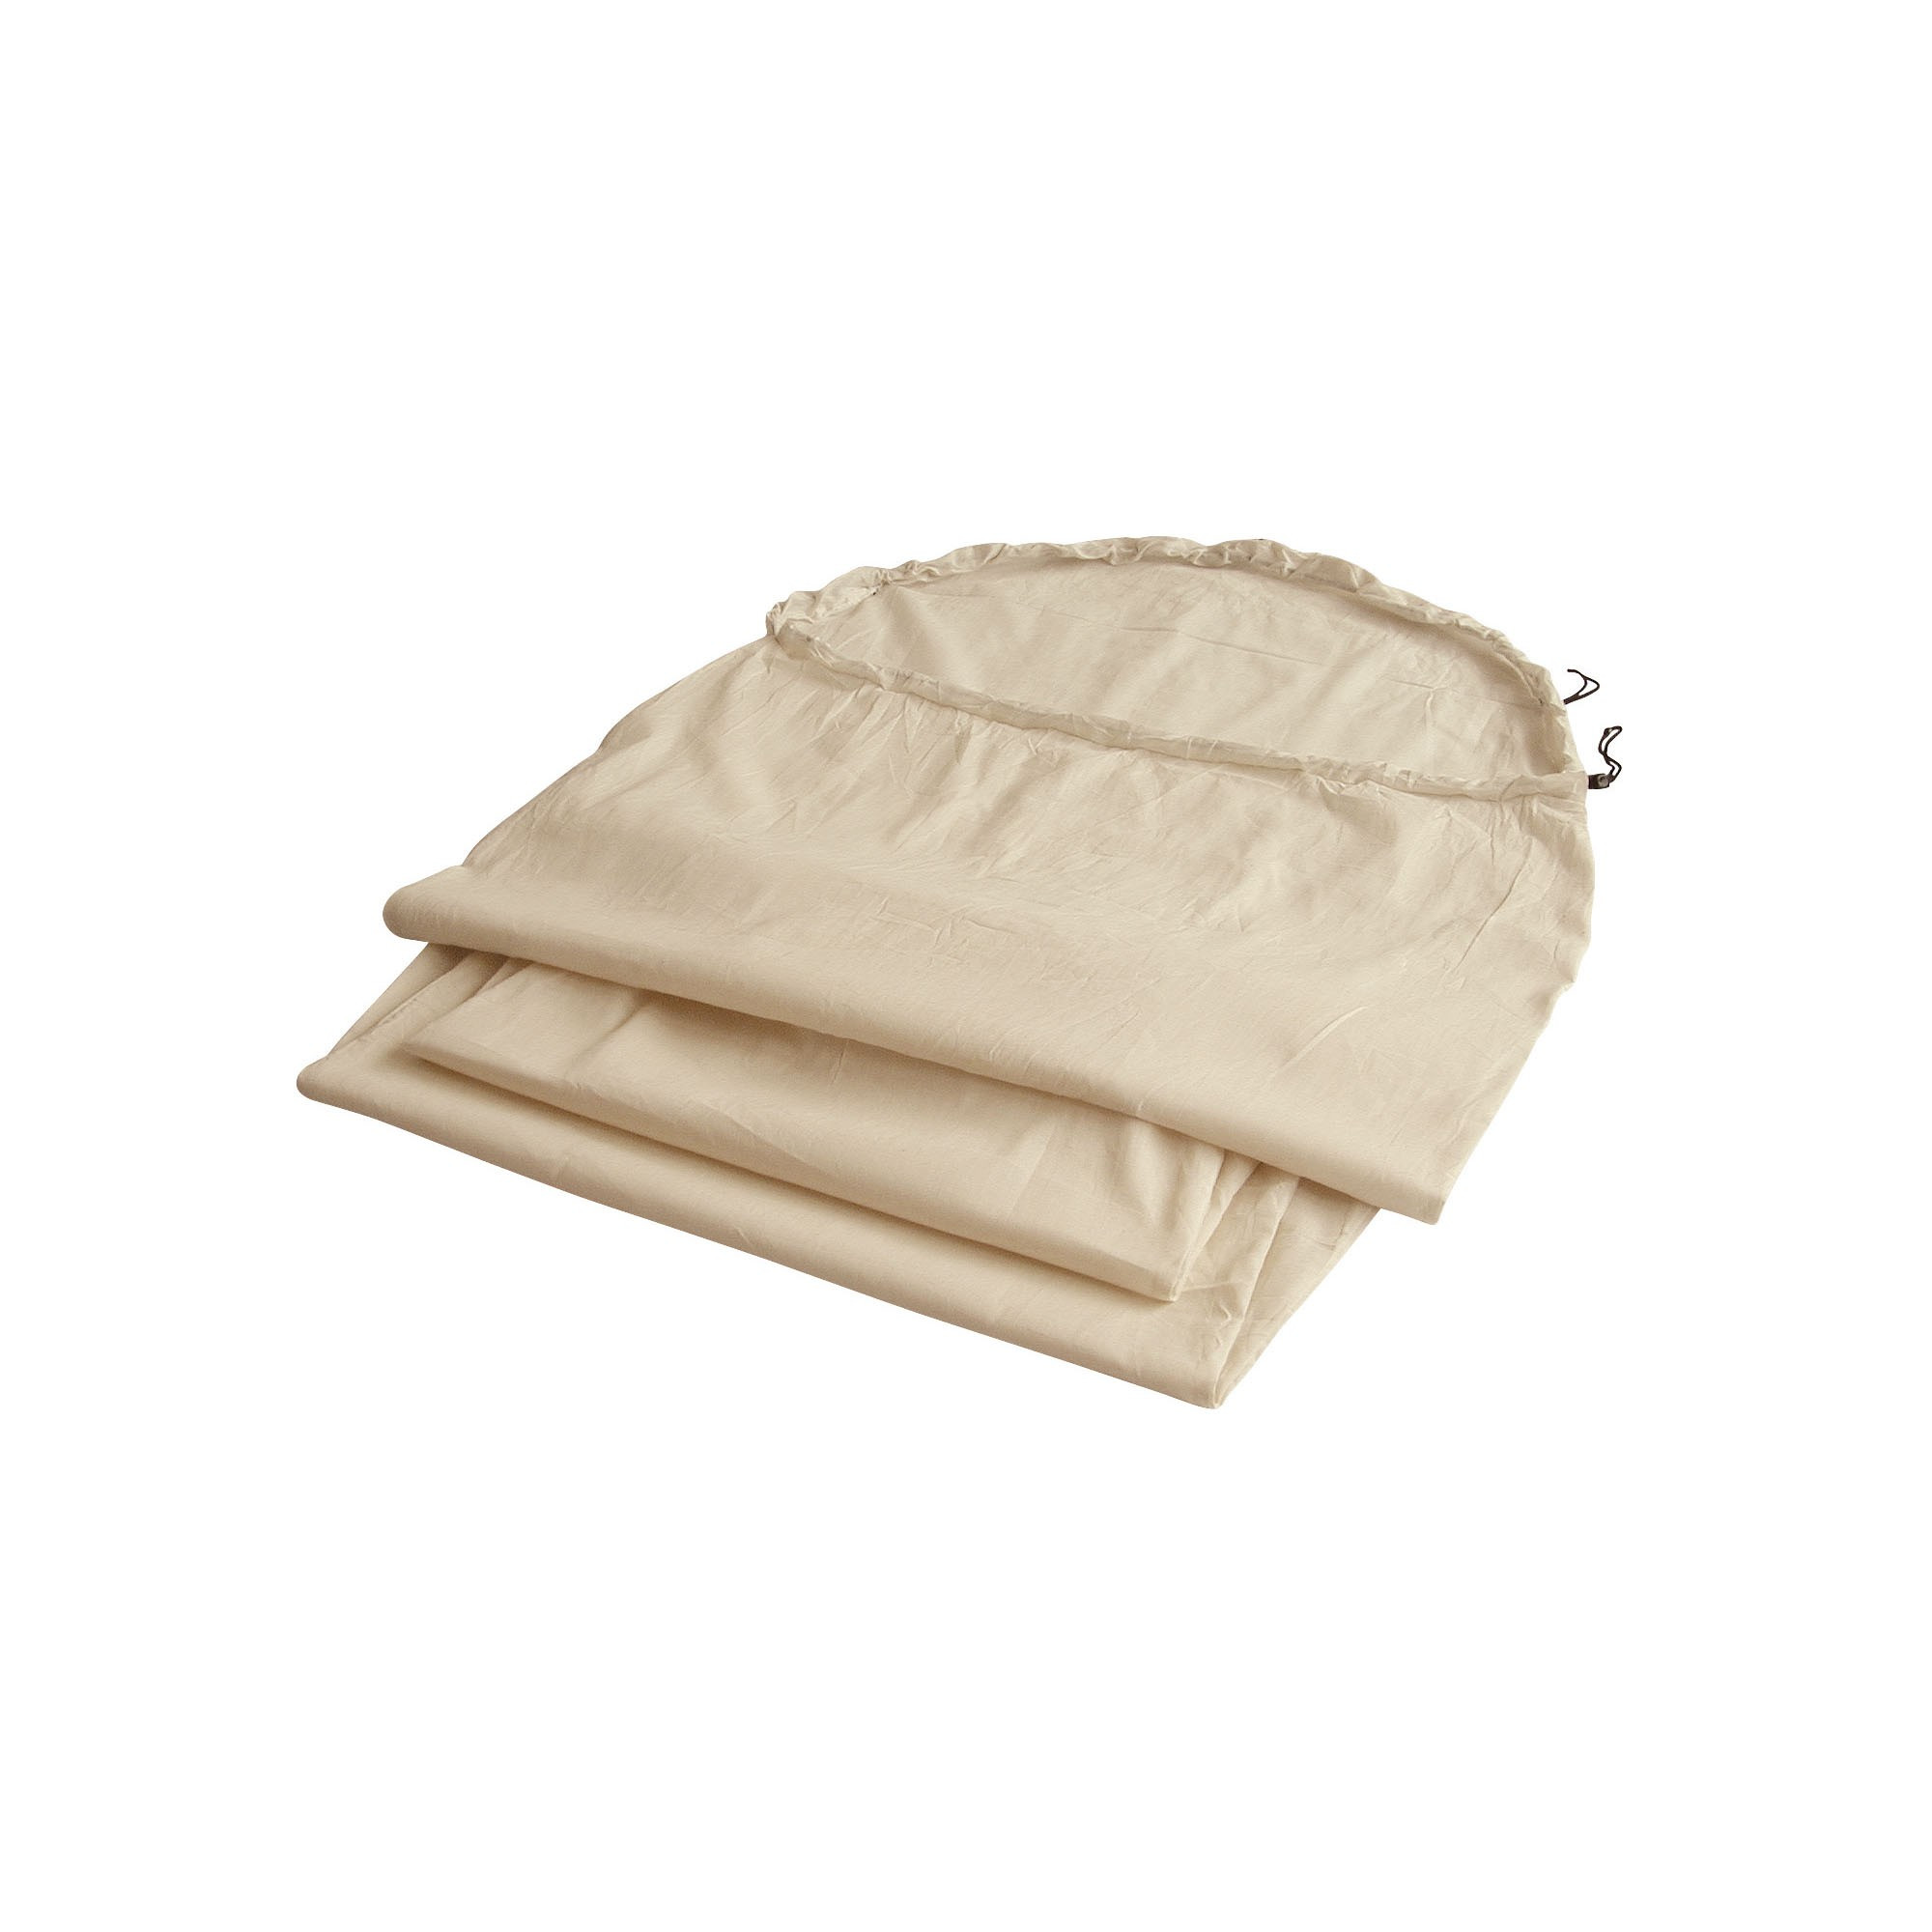 WILSA sarcophagus cotton bag sheet